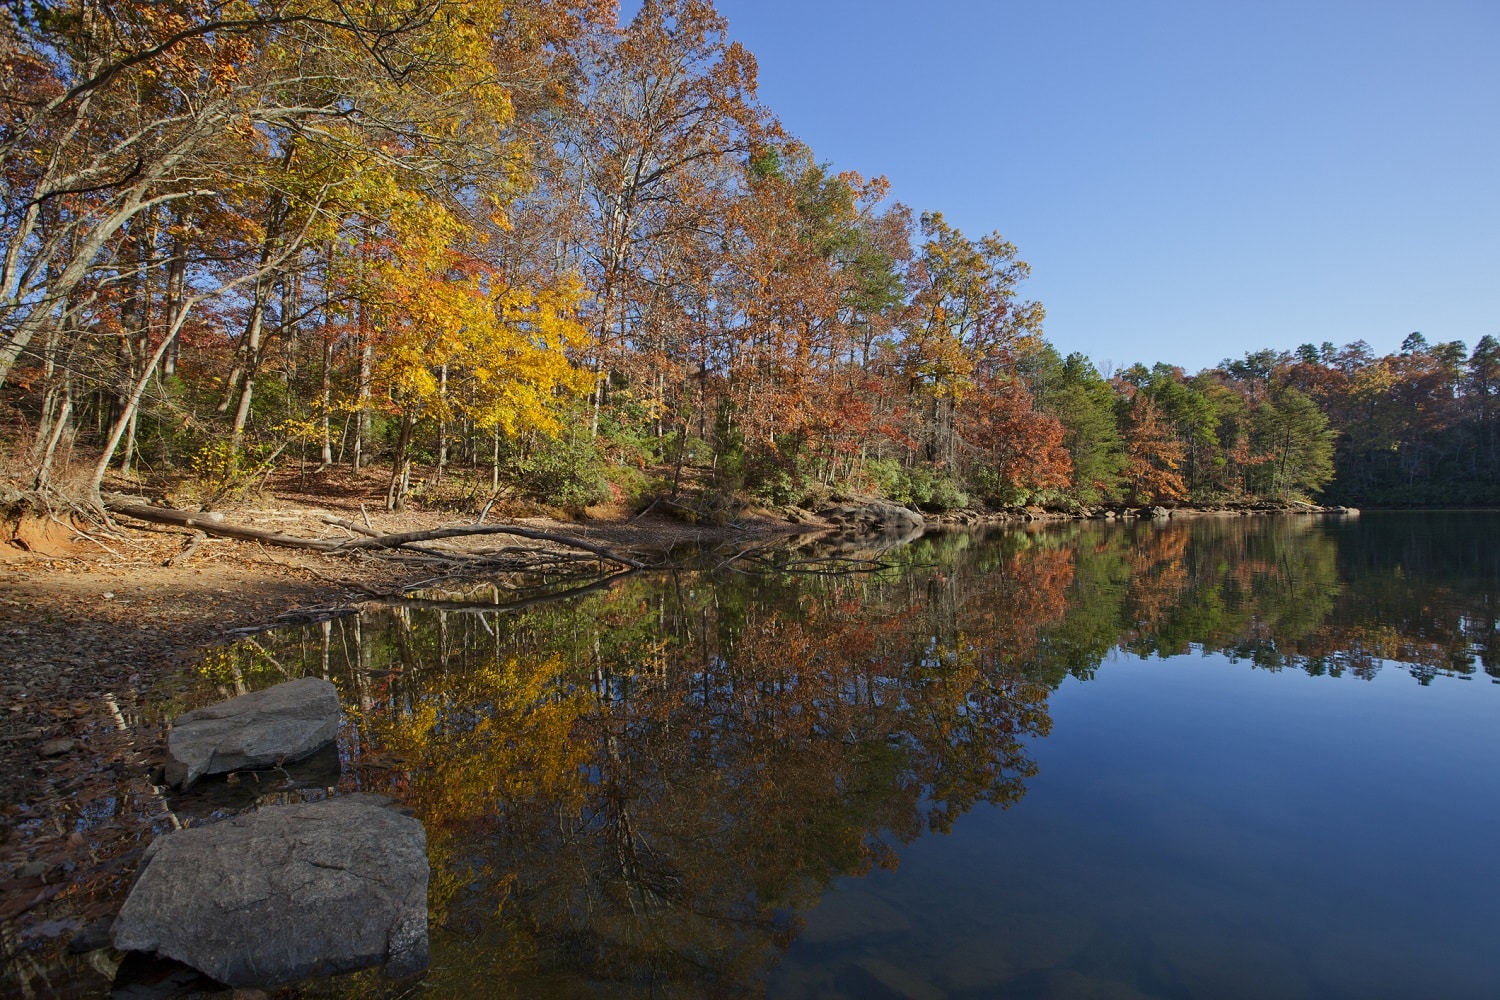 Lake Norman in autumn, showing the fall foliage in North Carolina